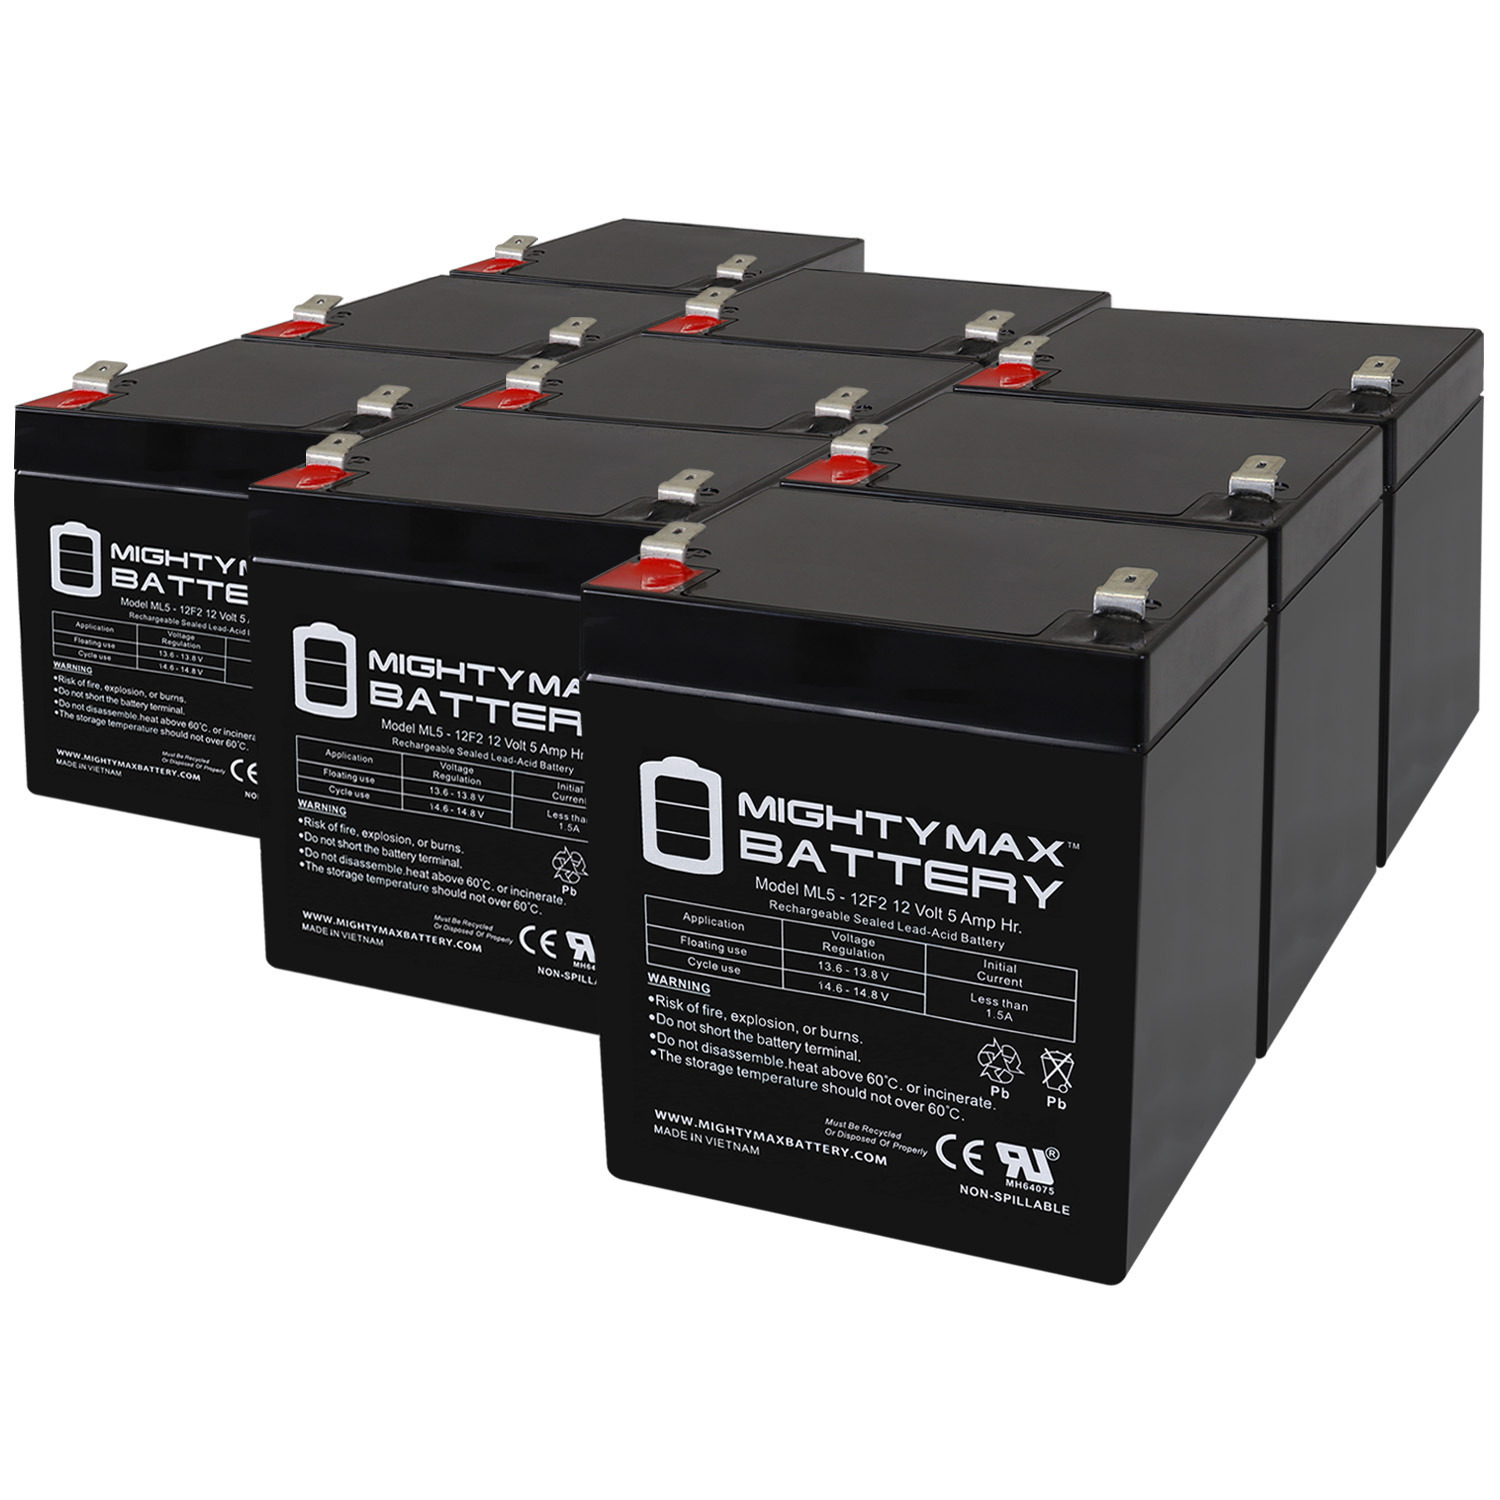 12V 5Ah F2 SLA Replacement Battery for Trikke E2 #20159460 - 9 Pack